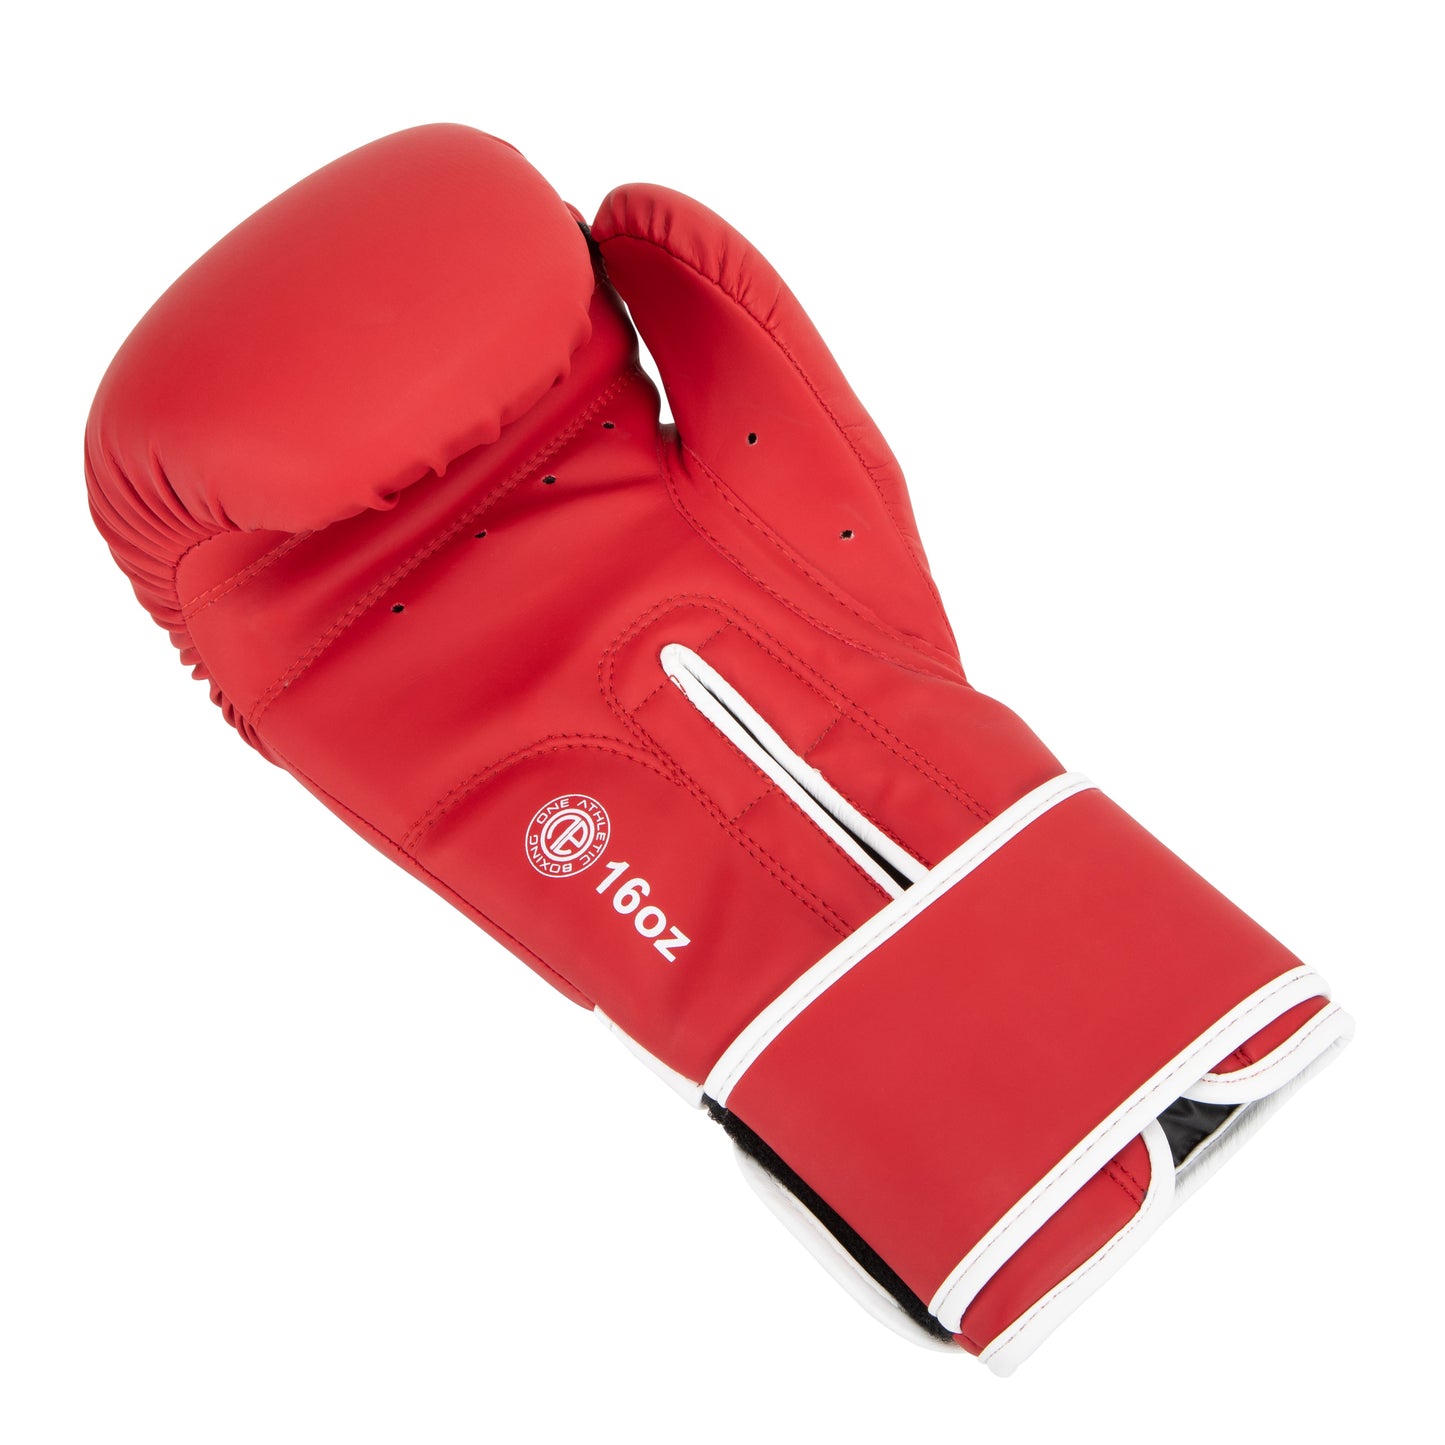 OA CONTENDER Mk 1 Training Glove - Strap - Red